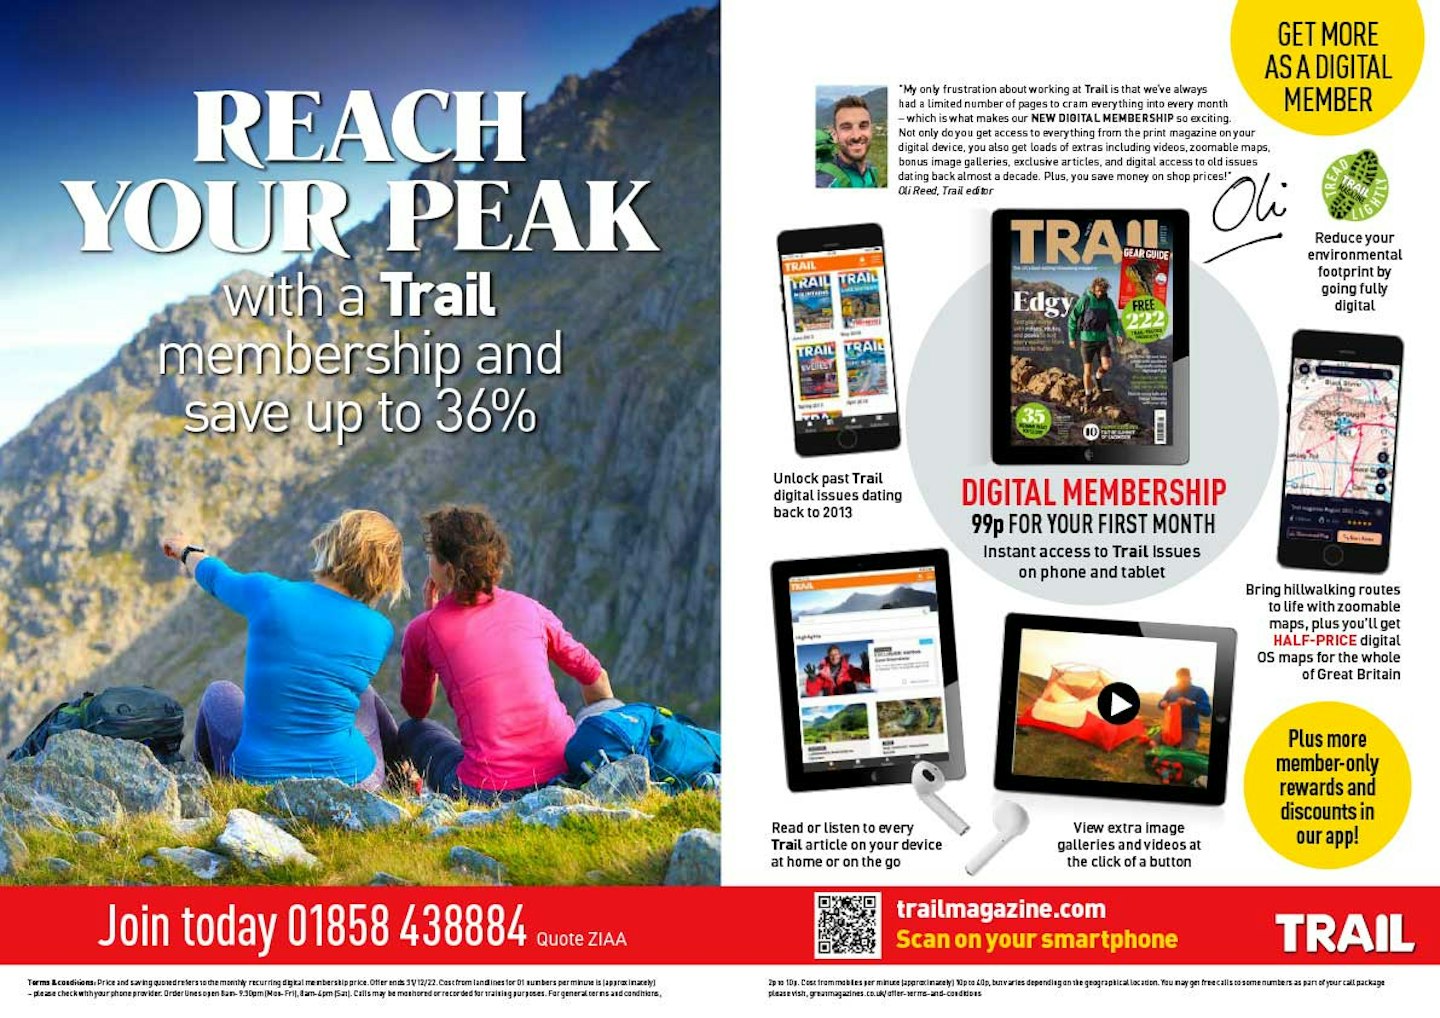 Trail magazine subscription membership offer